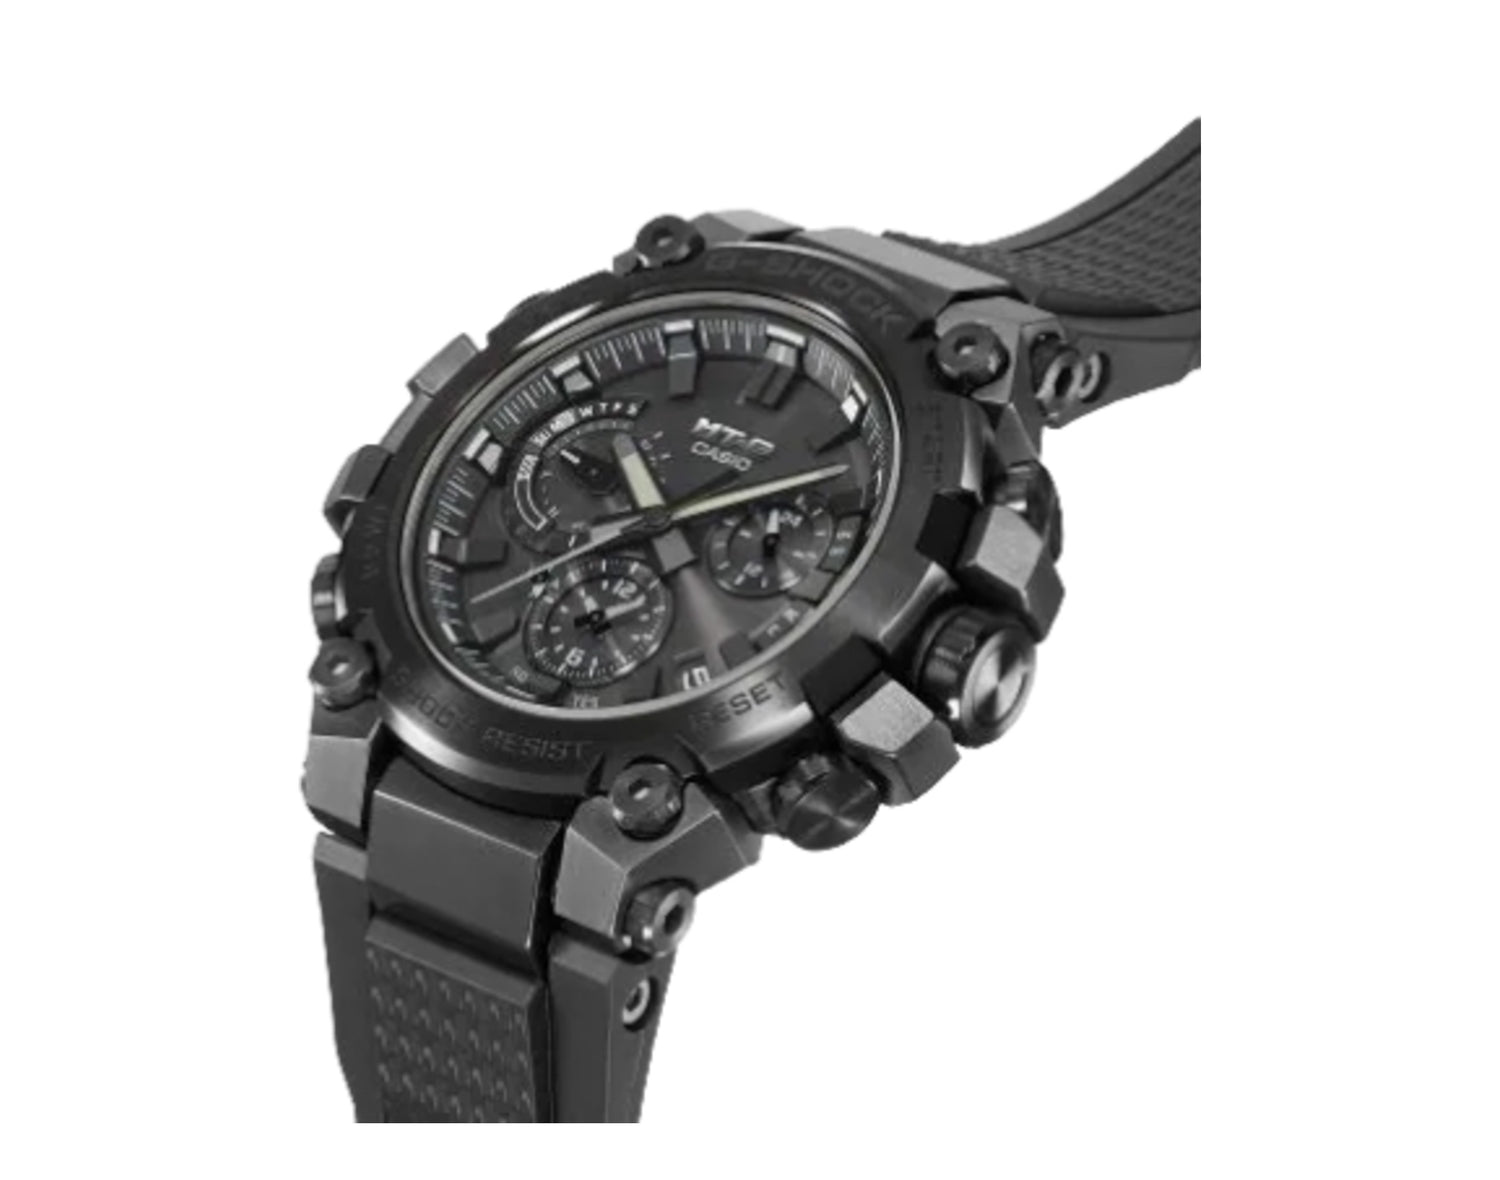 Casio G-Shock MTGB3000B MT-G Analog Chrono Metal Resin Men's Watch